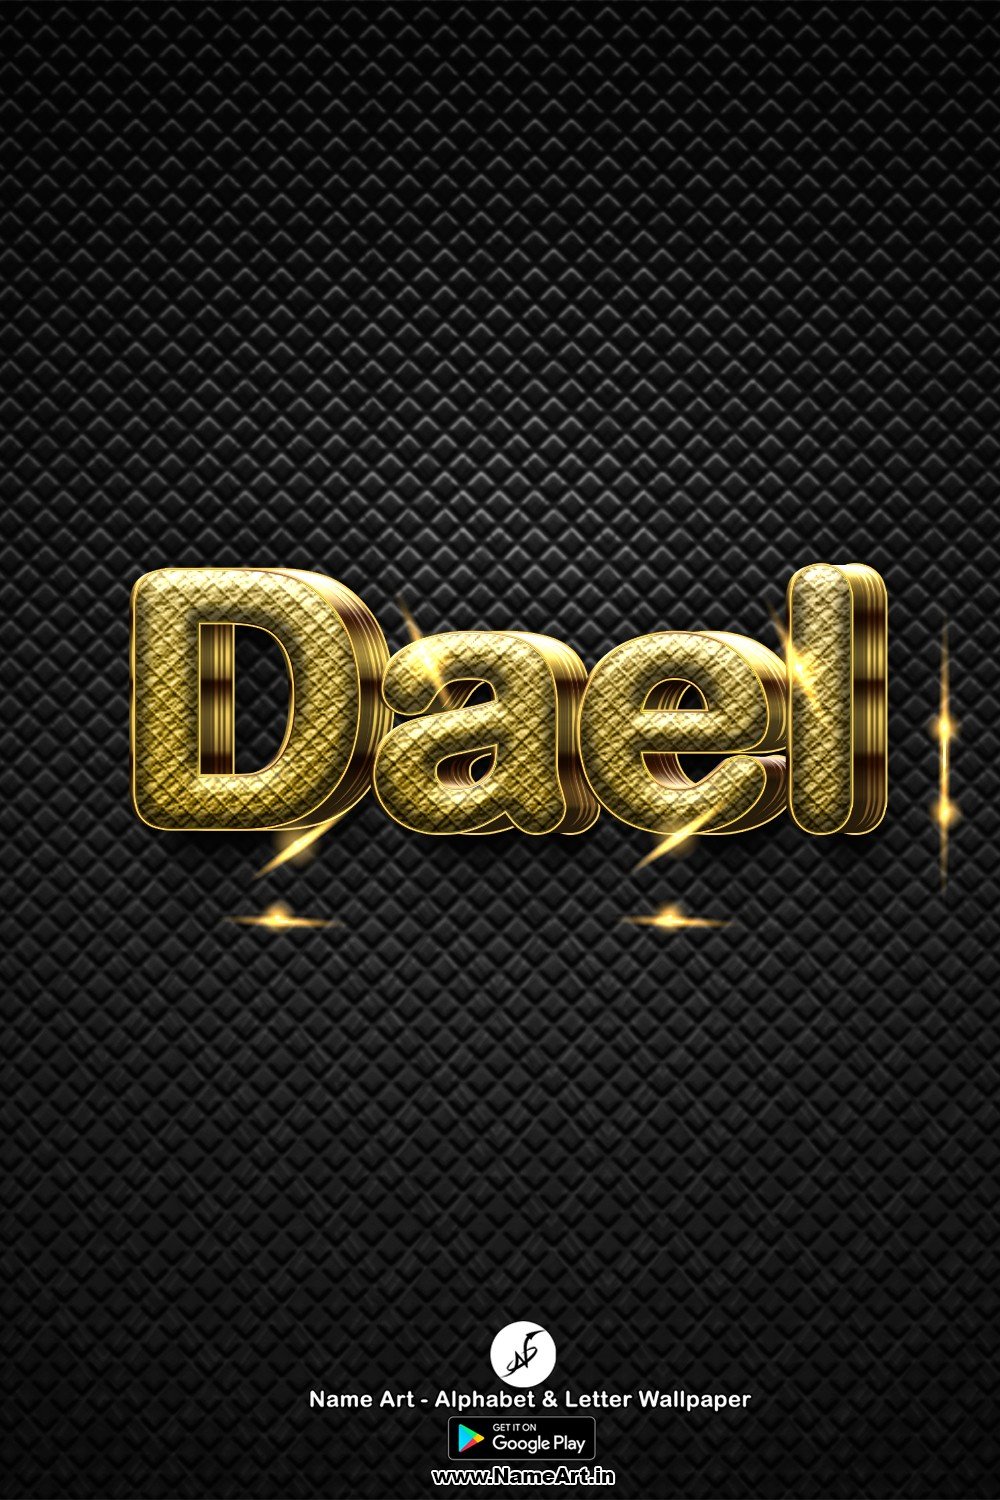 Dael | Whatsapp Status Dael | Happy Birthday Dael !! | New Whatsapp Status Dael Images |